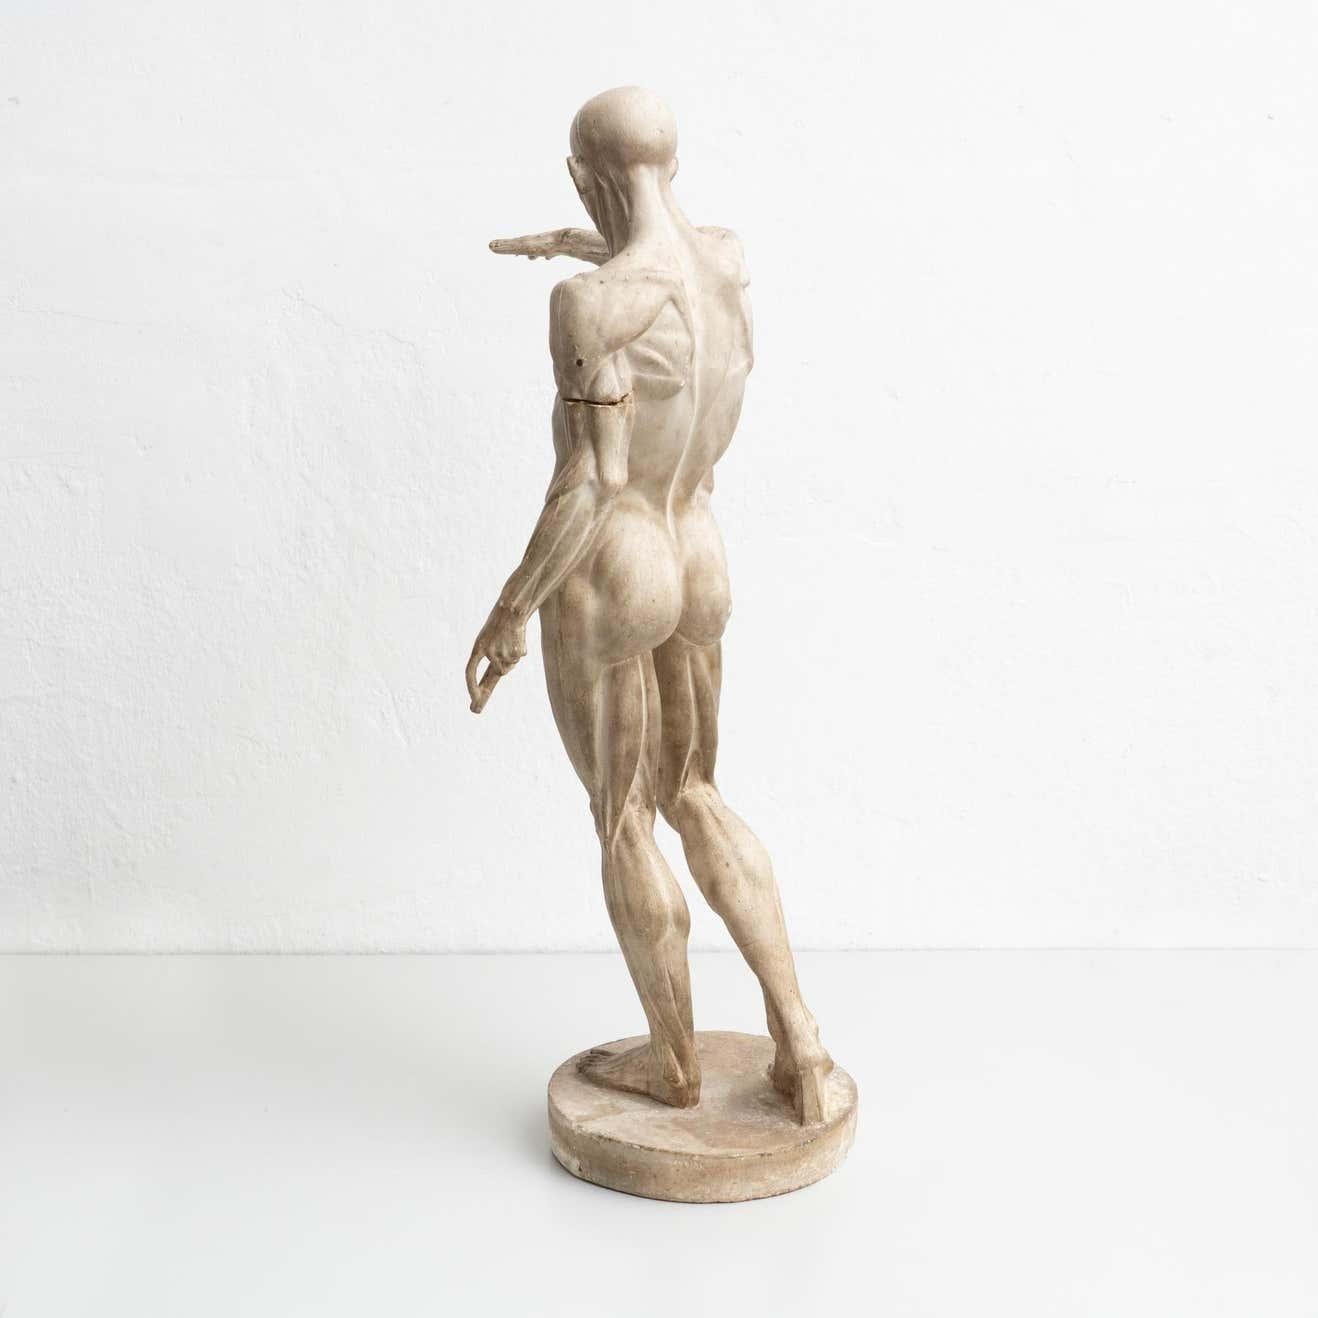 Modern Rare Find, an Early Plaster Human Anatomy Sculpture of a Man, circa 1930